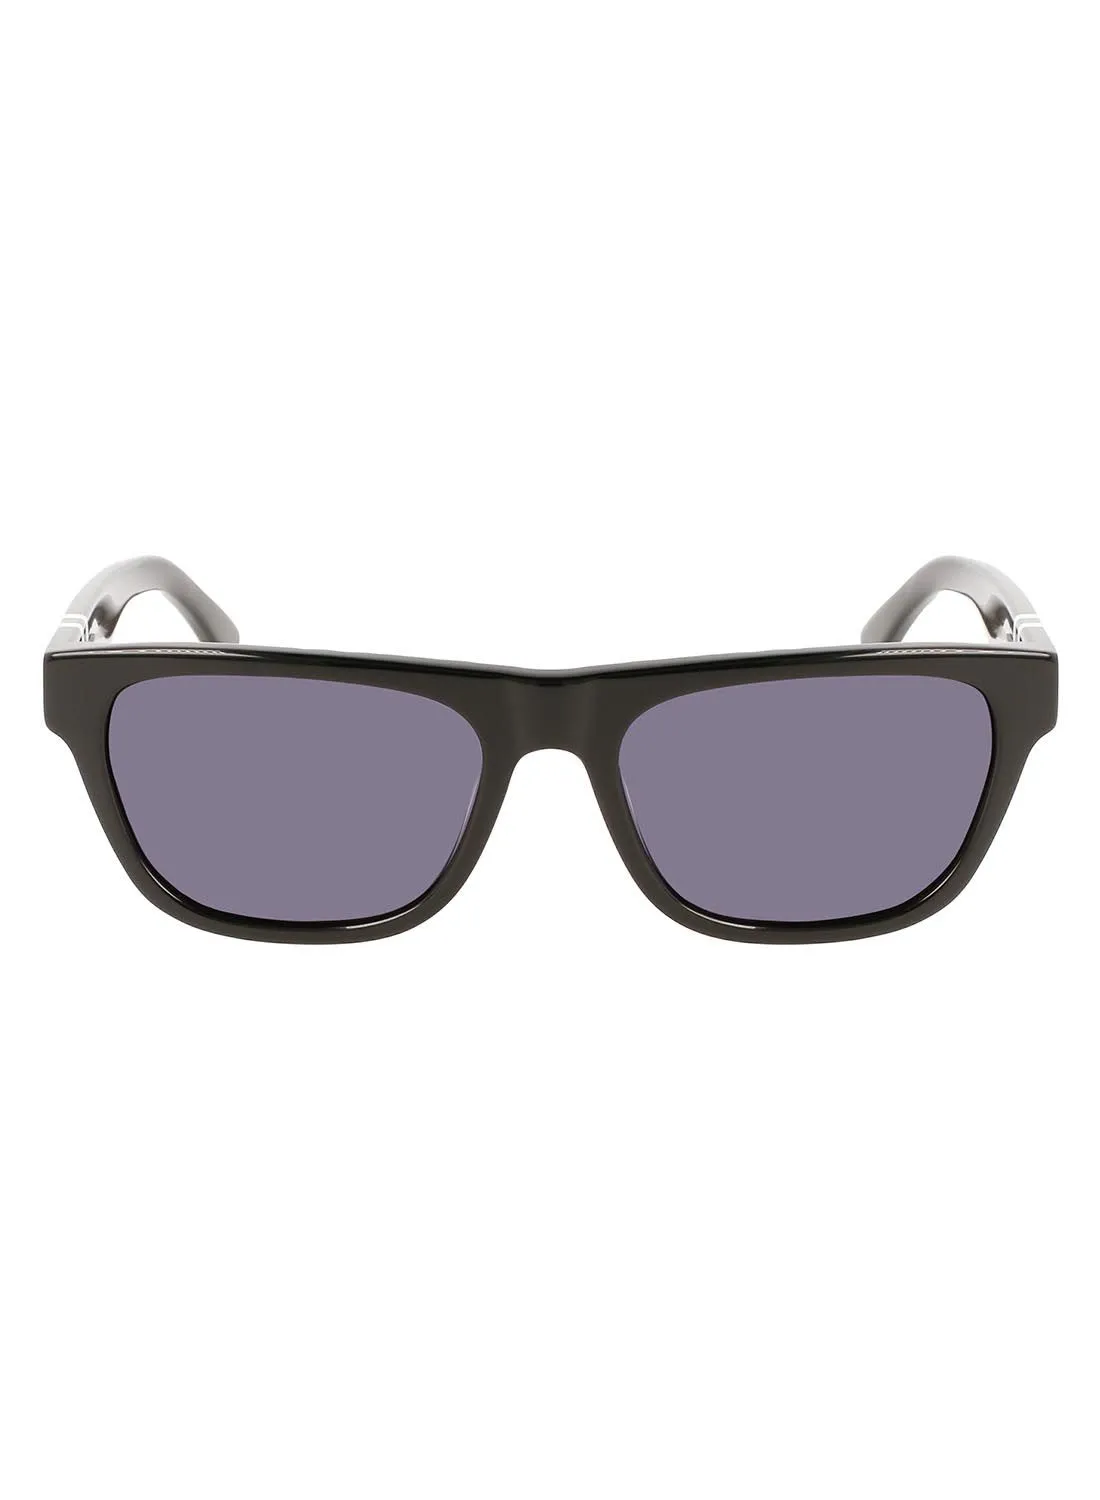 LACOSTE UV Rays Protection Eyewear Sunglasses L979S-001-5618